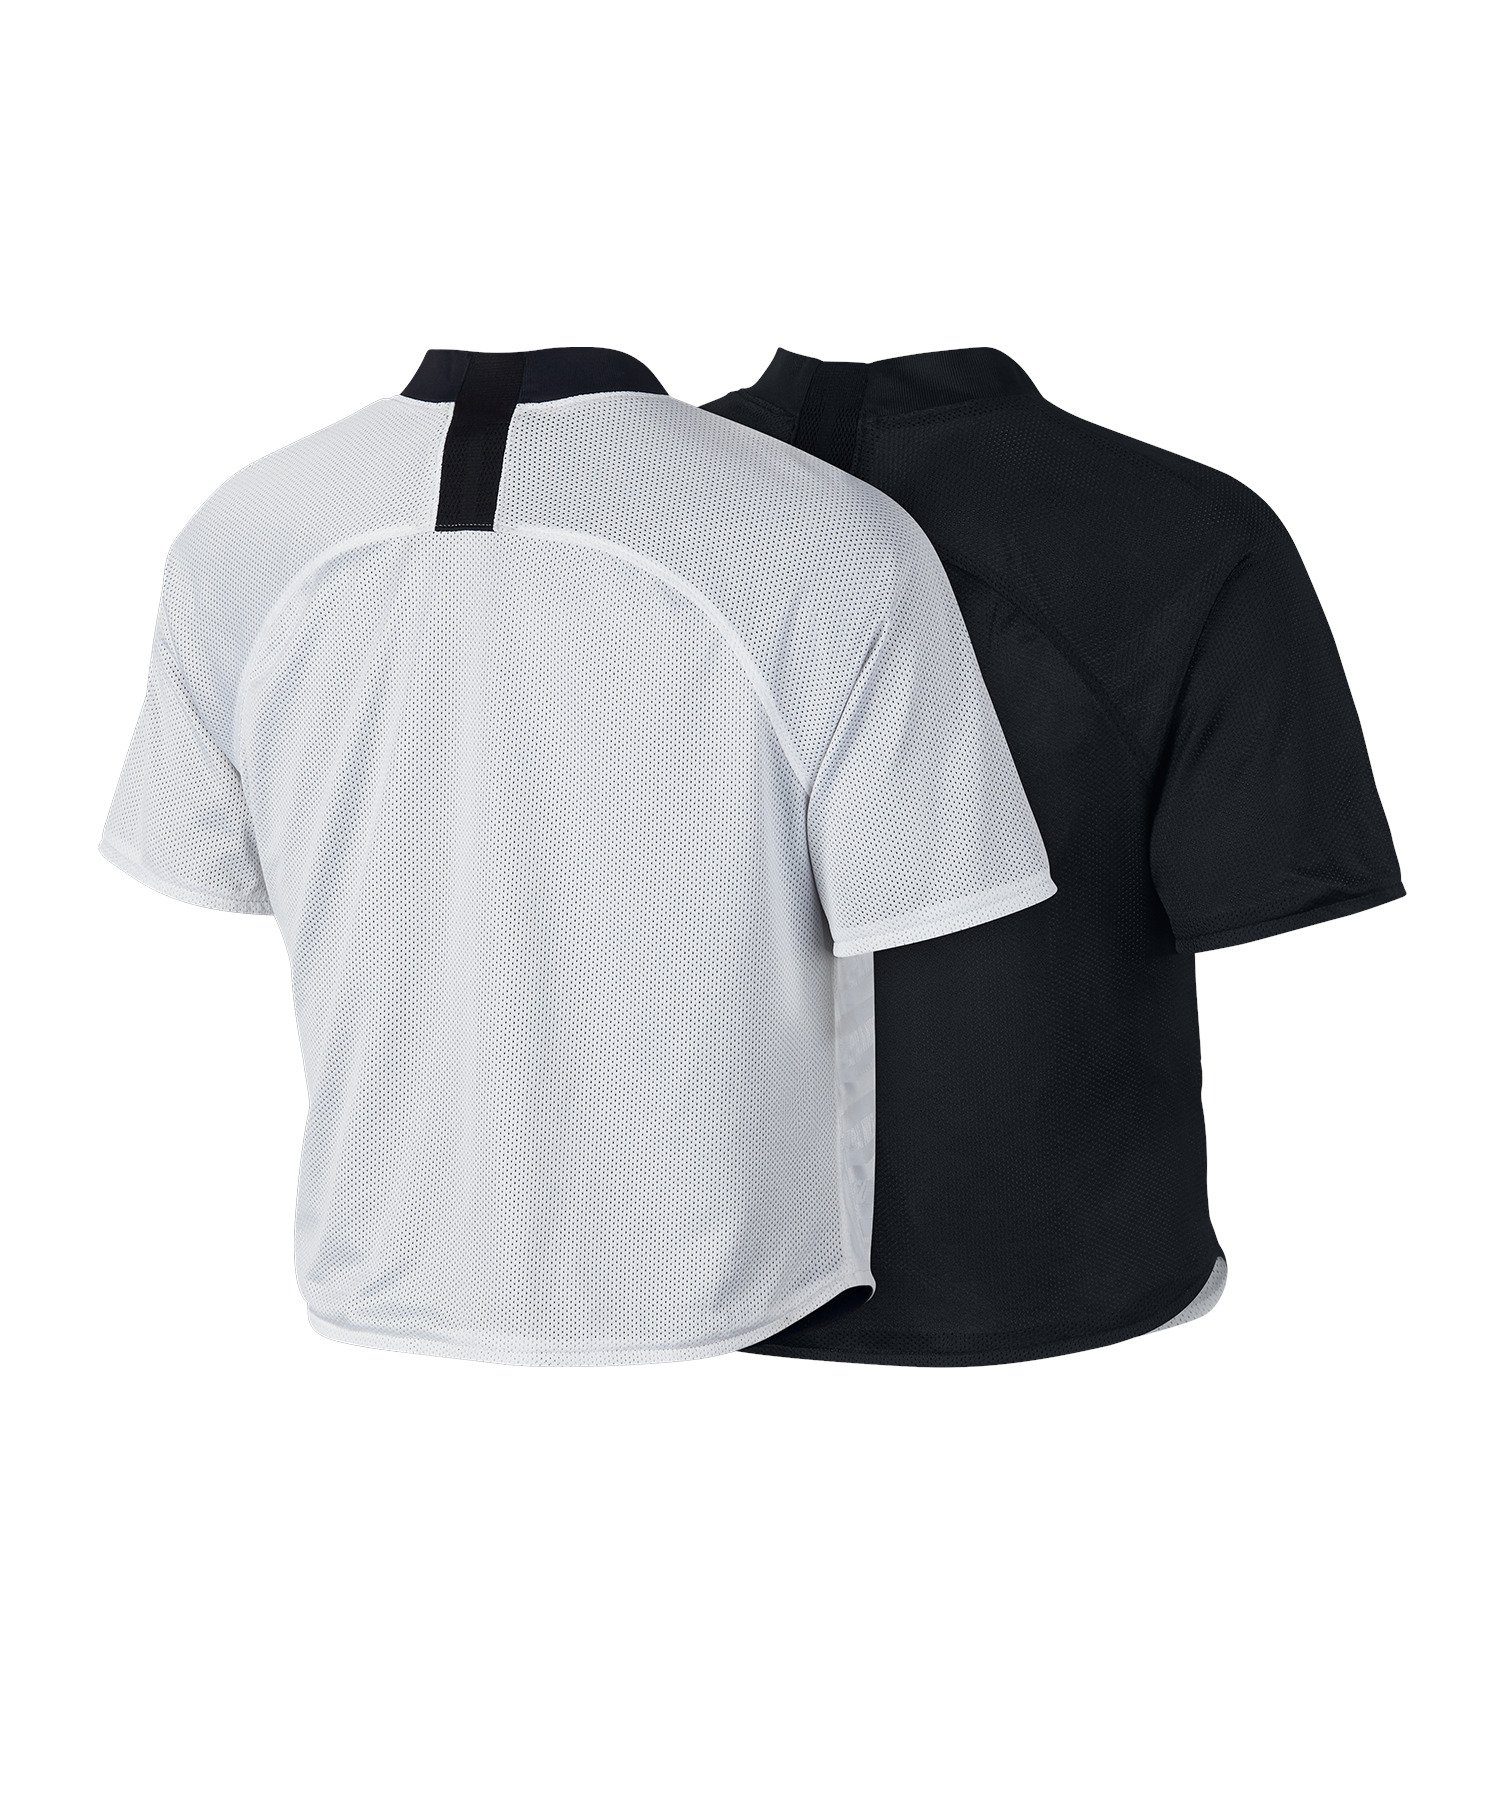 Crop default T-Shirt Sportswear Damen Top F.C. Nike Schwarz